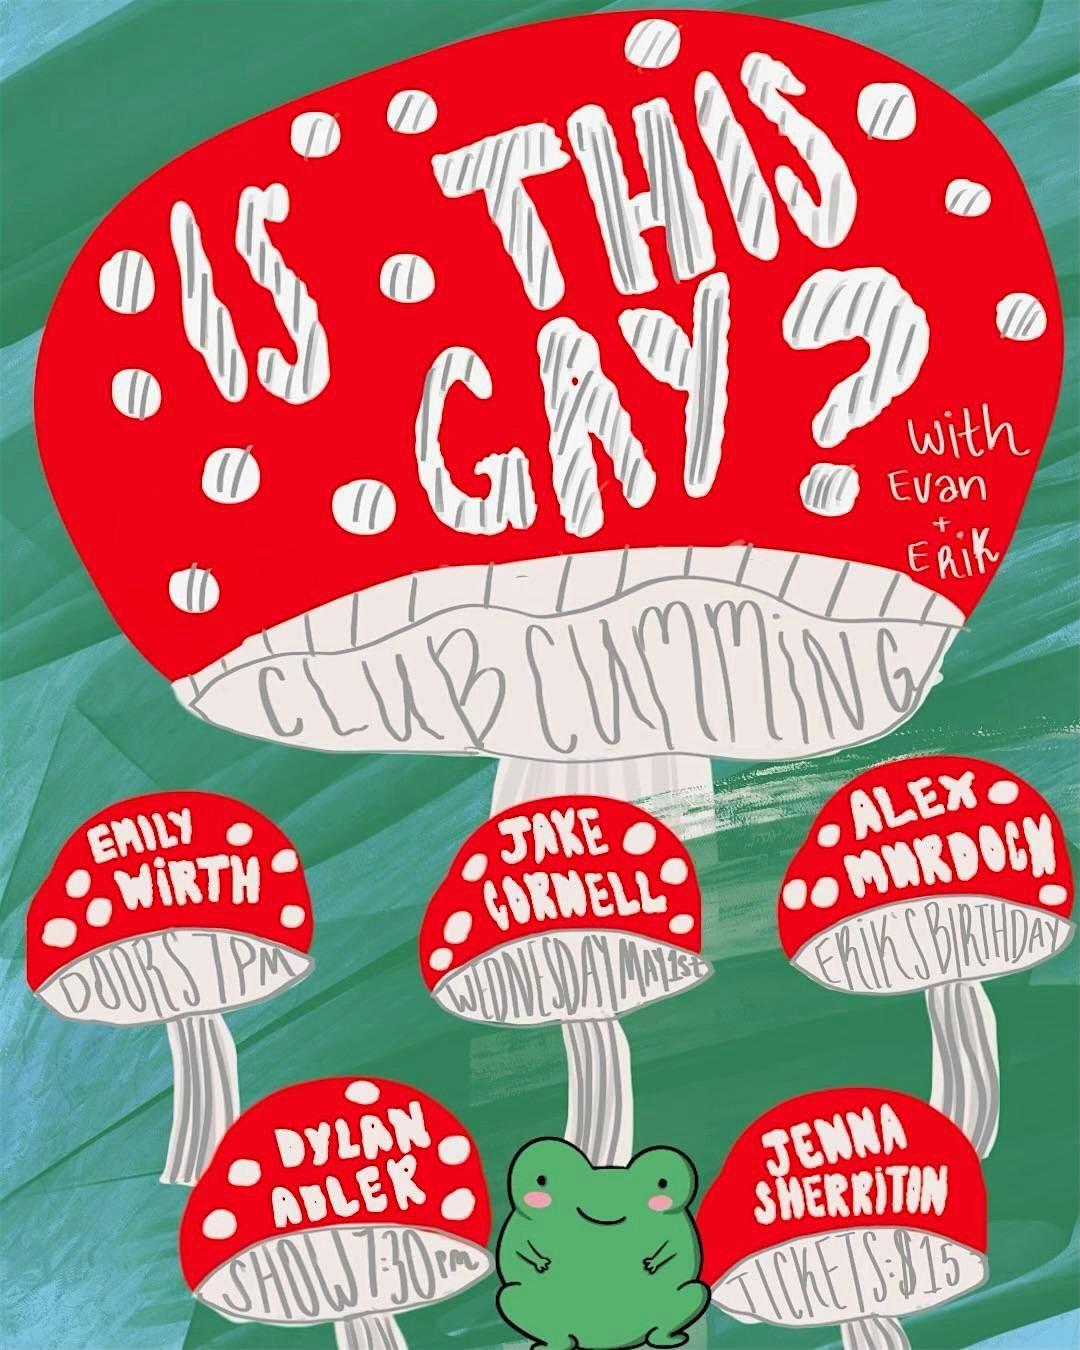 Is This Gay? (with Evan Lazarus & Erik Martini)